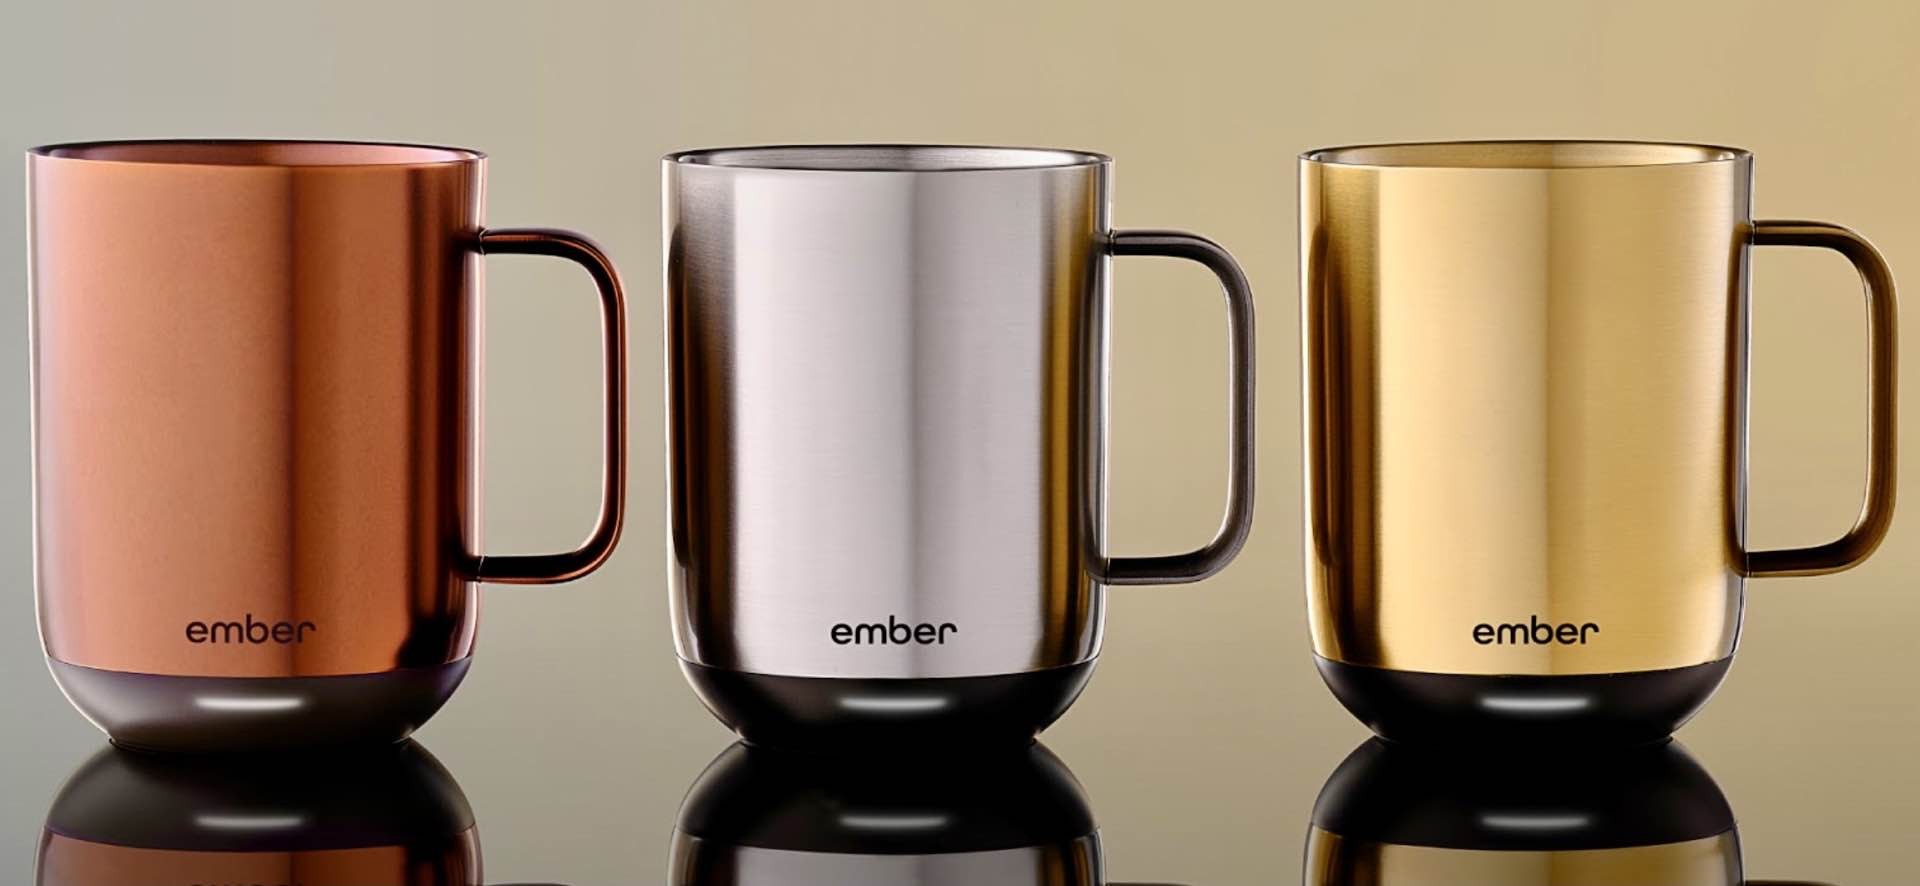 ember-mug-2-metallic-collection-2